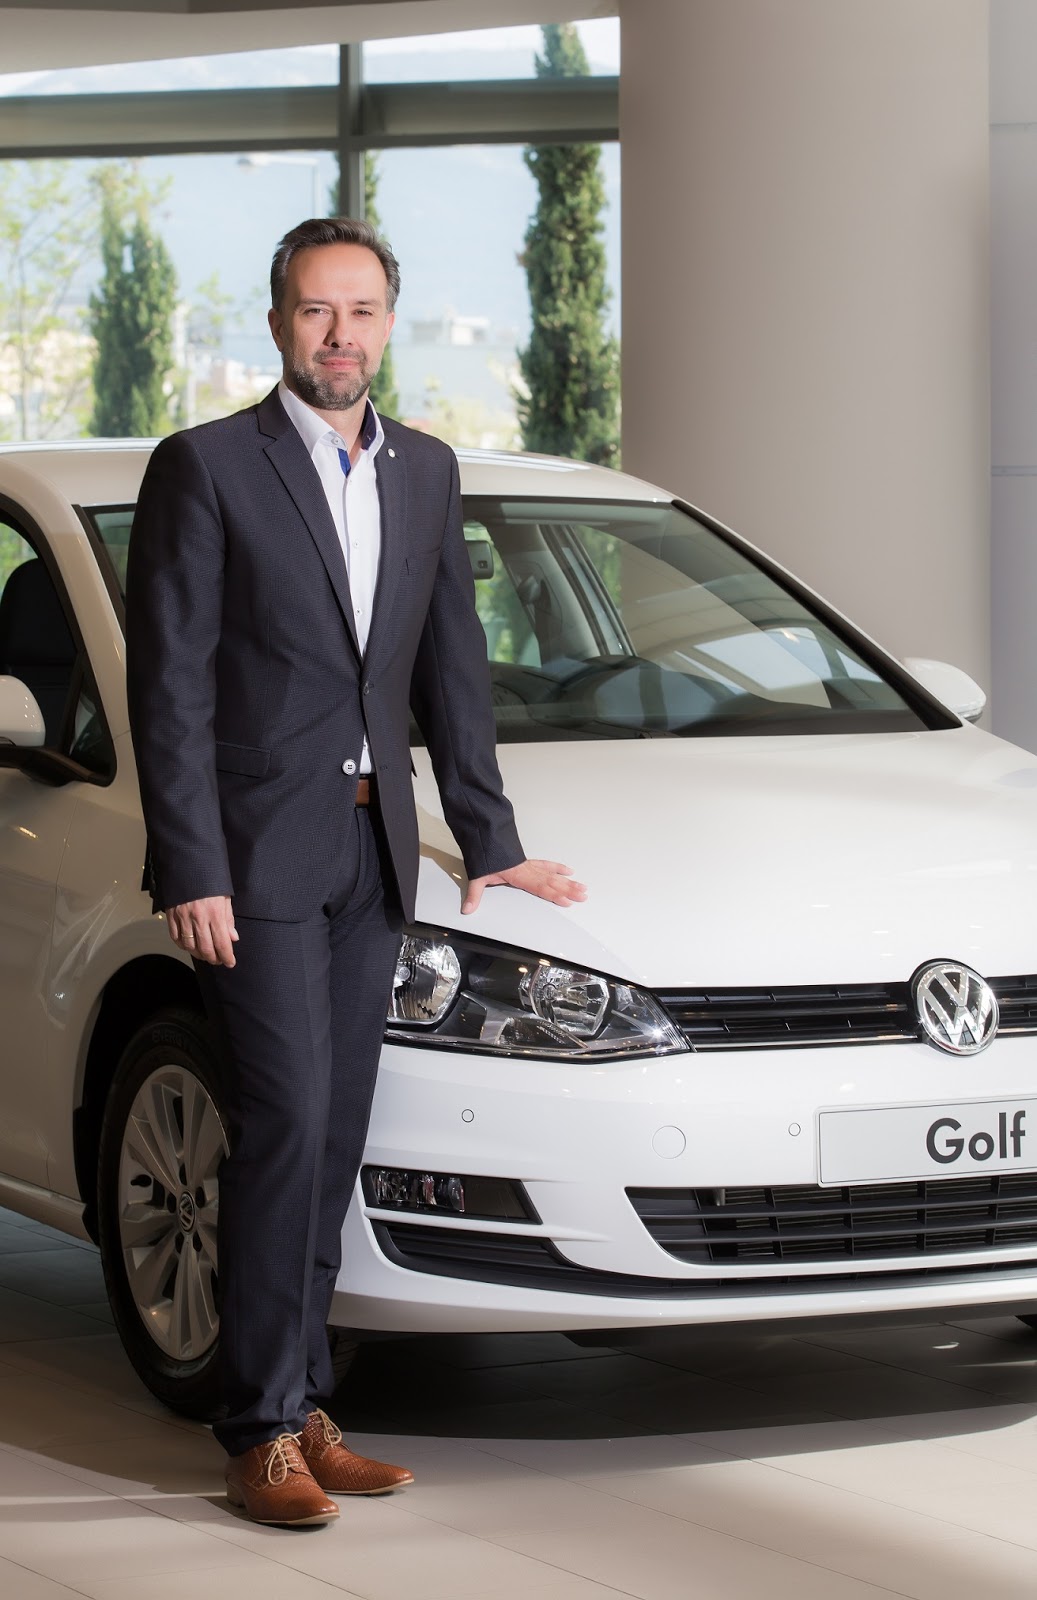 KOSMOCAR VOLKWAGEN 25CE259825CE259125CE259D25CE259125CE25A325CE259725CE25A32B25CE259A25CE259F25CE259D25CE259925CE25A325CE25A425CE259725CE25A3 2 Παγκόσμια πρωταθλήτρια στις πωλήσεις το Volkswagen Group